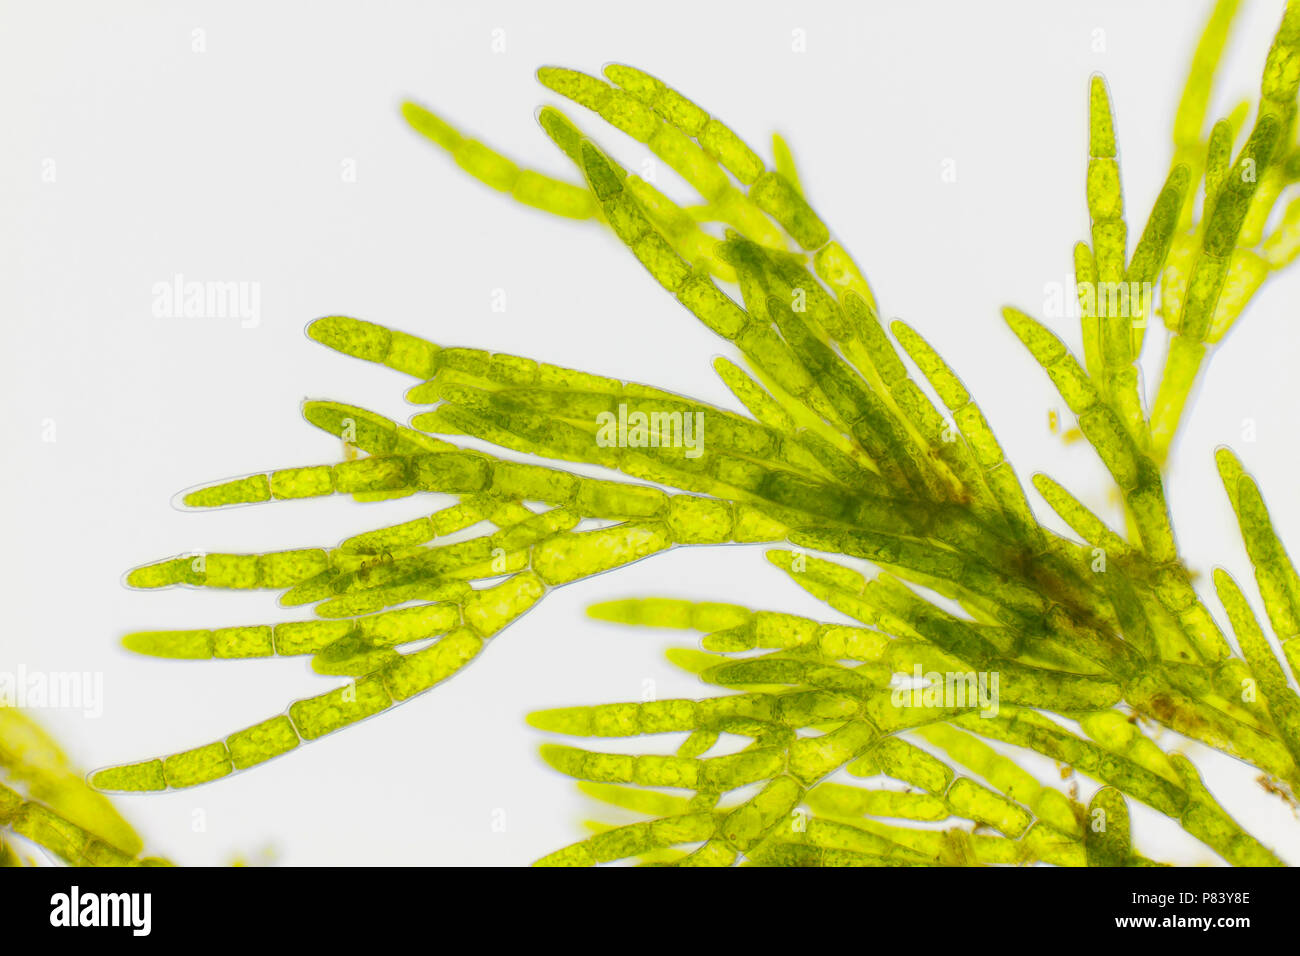 Microscopic view of green algae (Cladophora). Brightfield illumination. Stock Photo